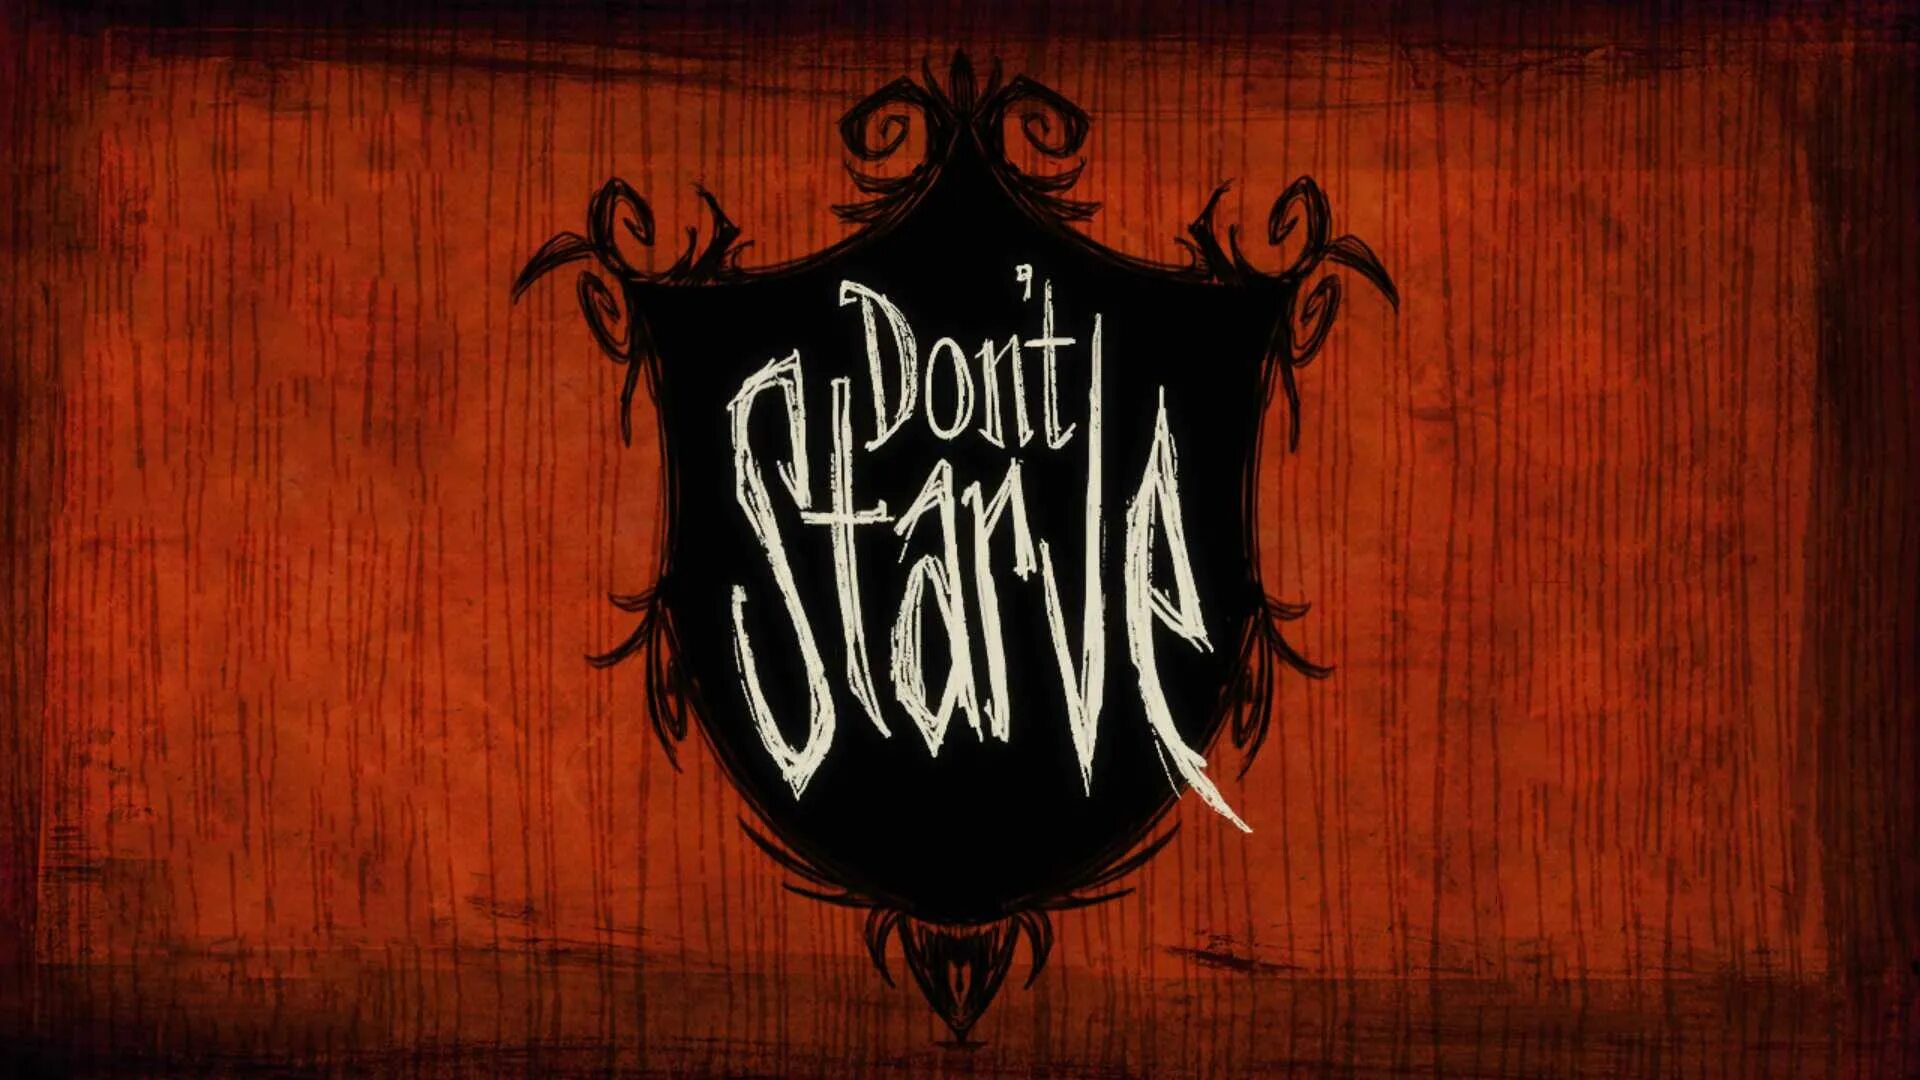 Don t starve gaming. Don't Starve together menu. Don't Starve together меню. Don't Starve логотип. Don't Starve фон.